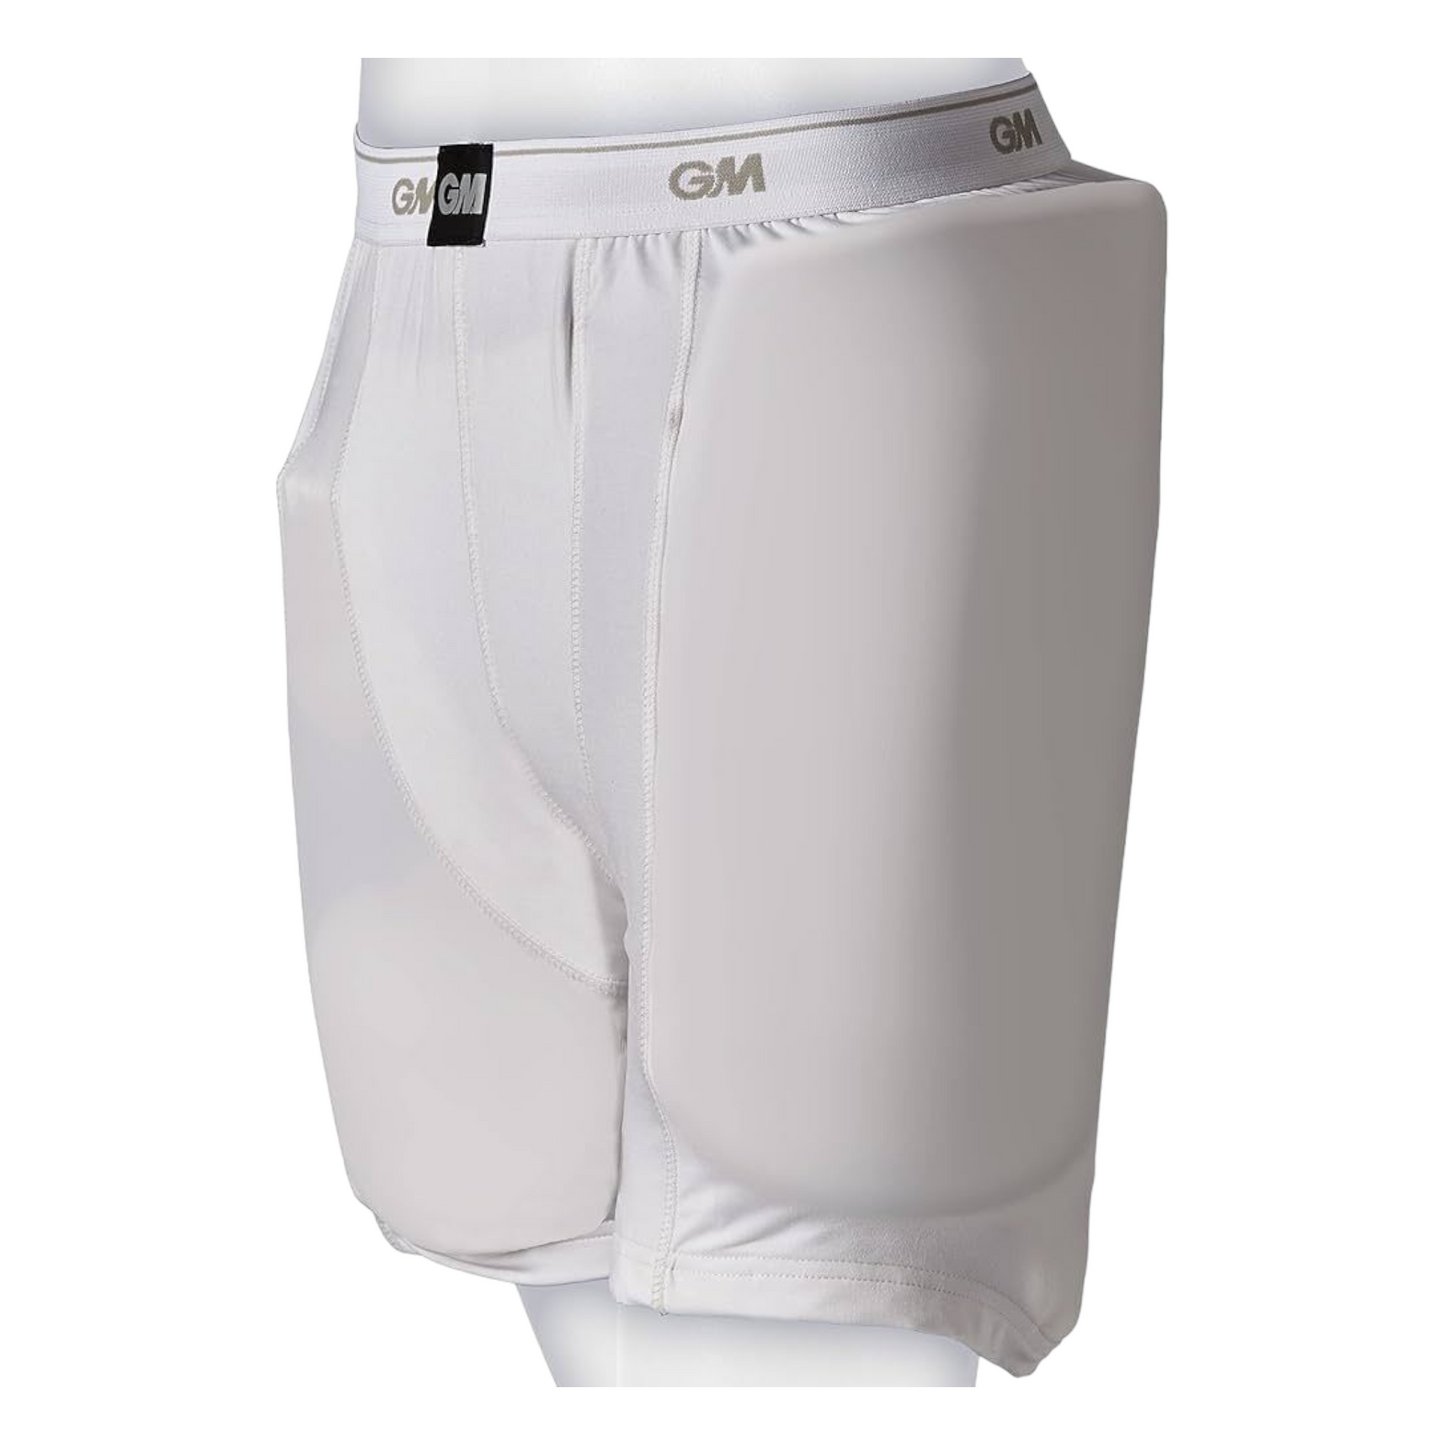 GM 909 Protective Shorts